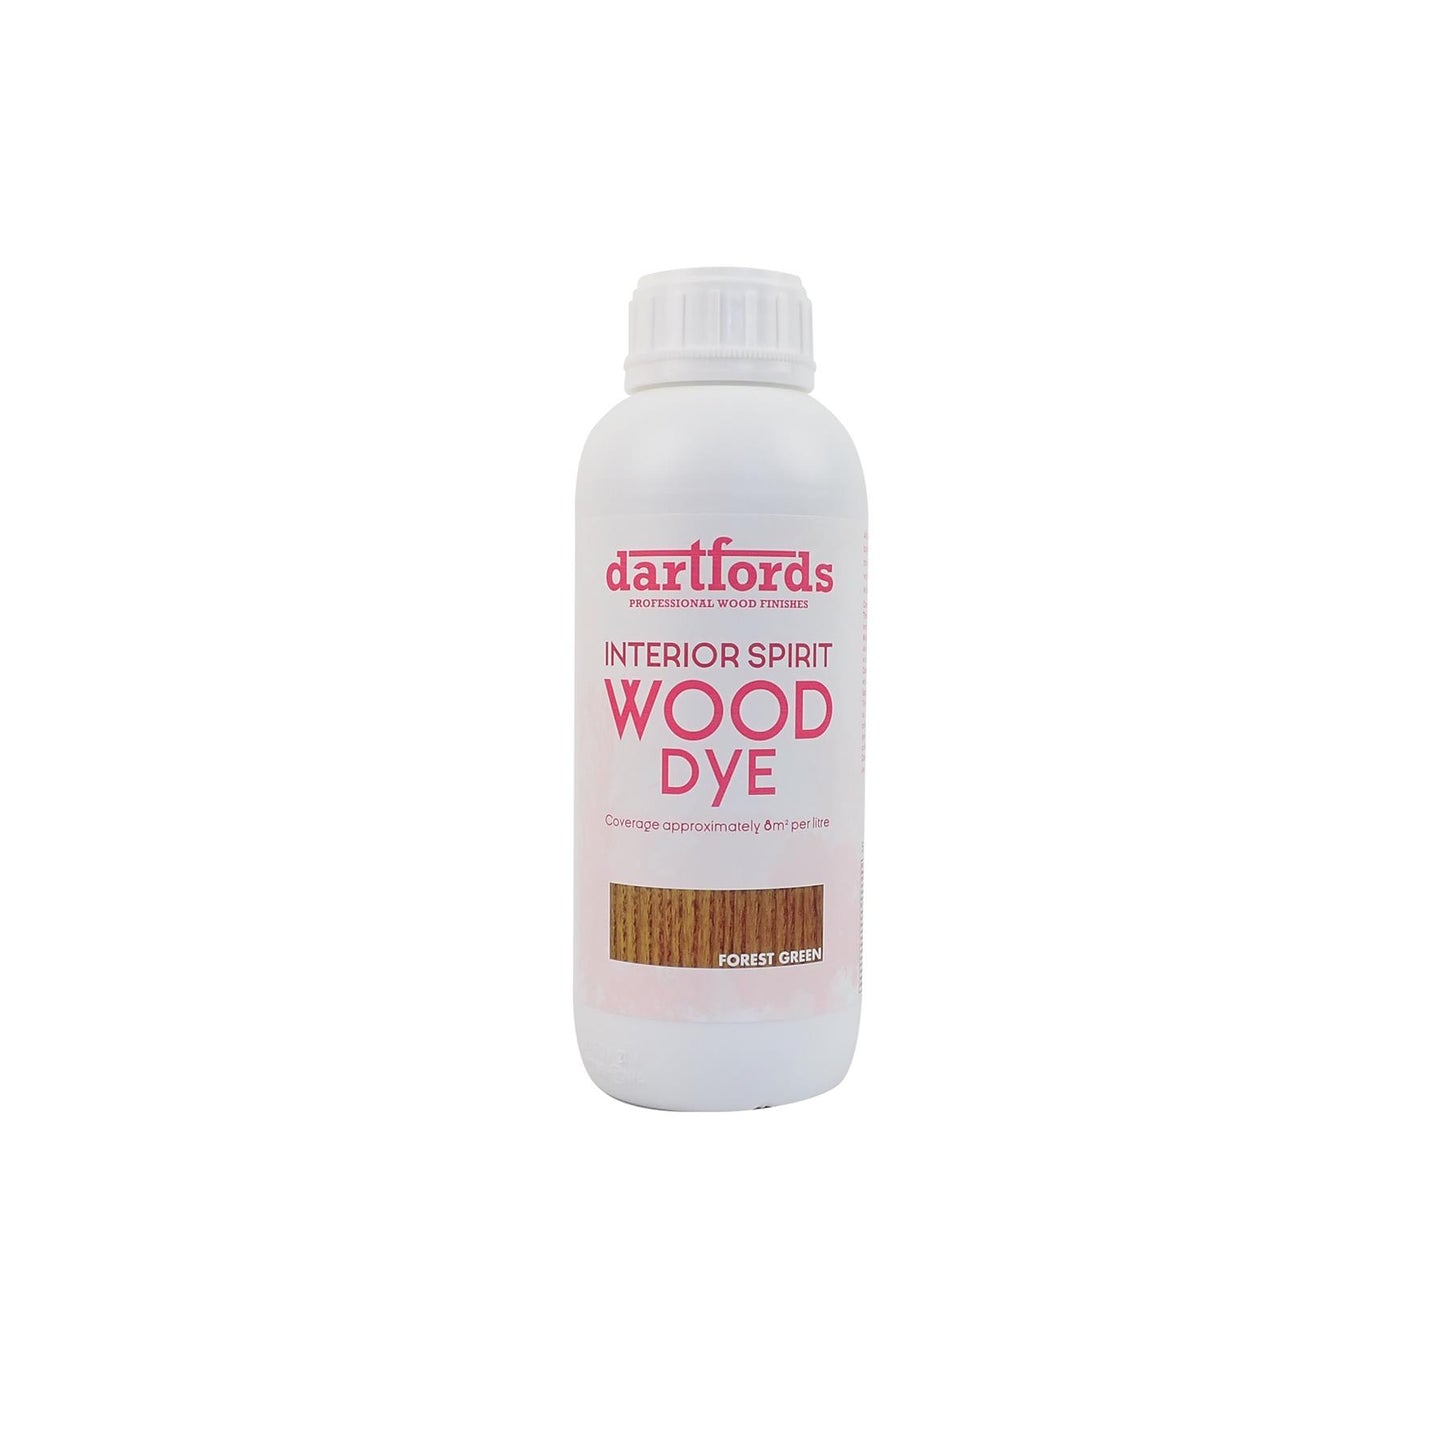 dartfords Forest Green Interior Spirit Based Wood Dye - 1 litre Tin